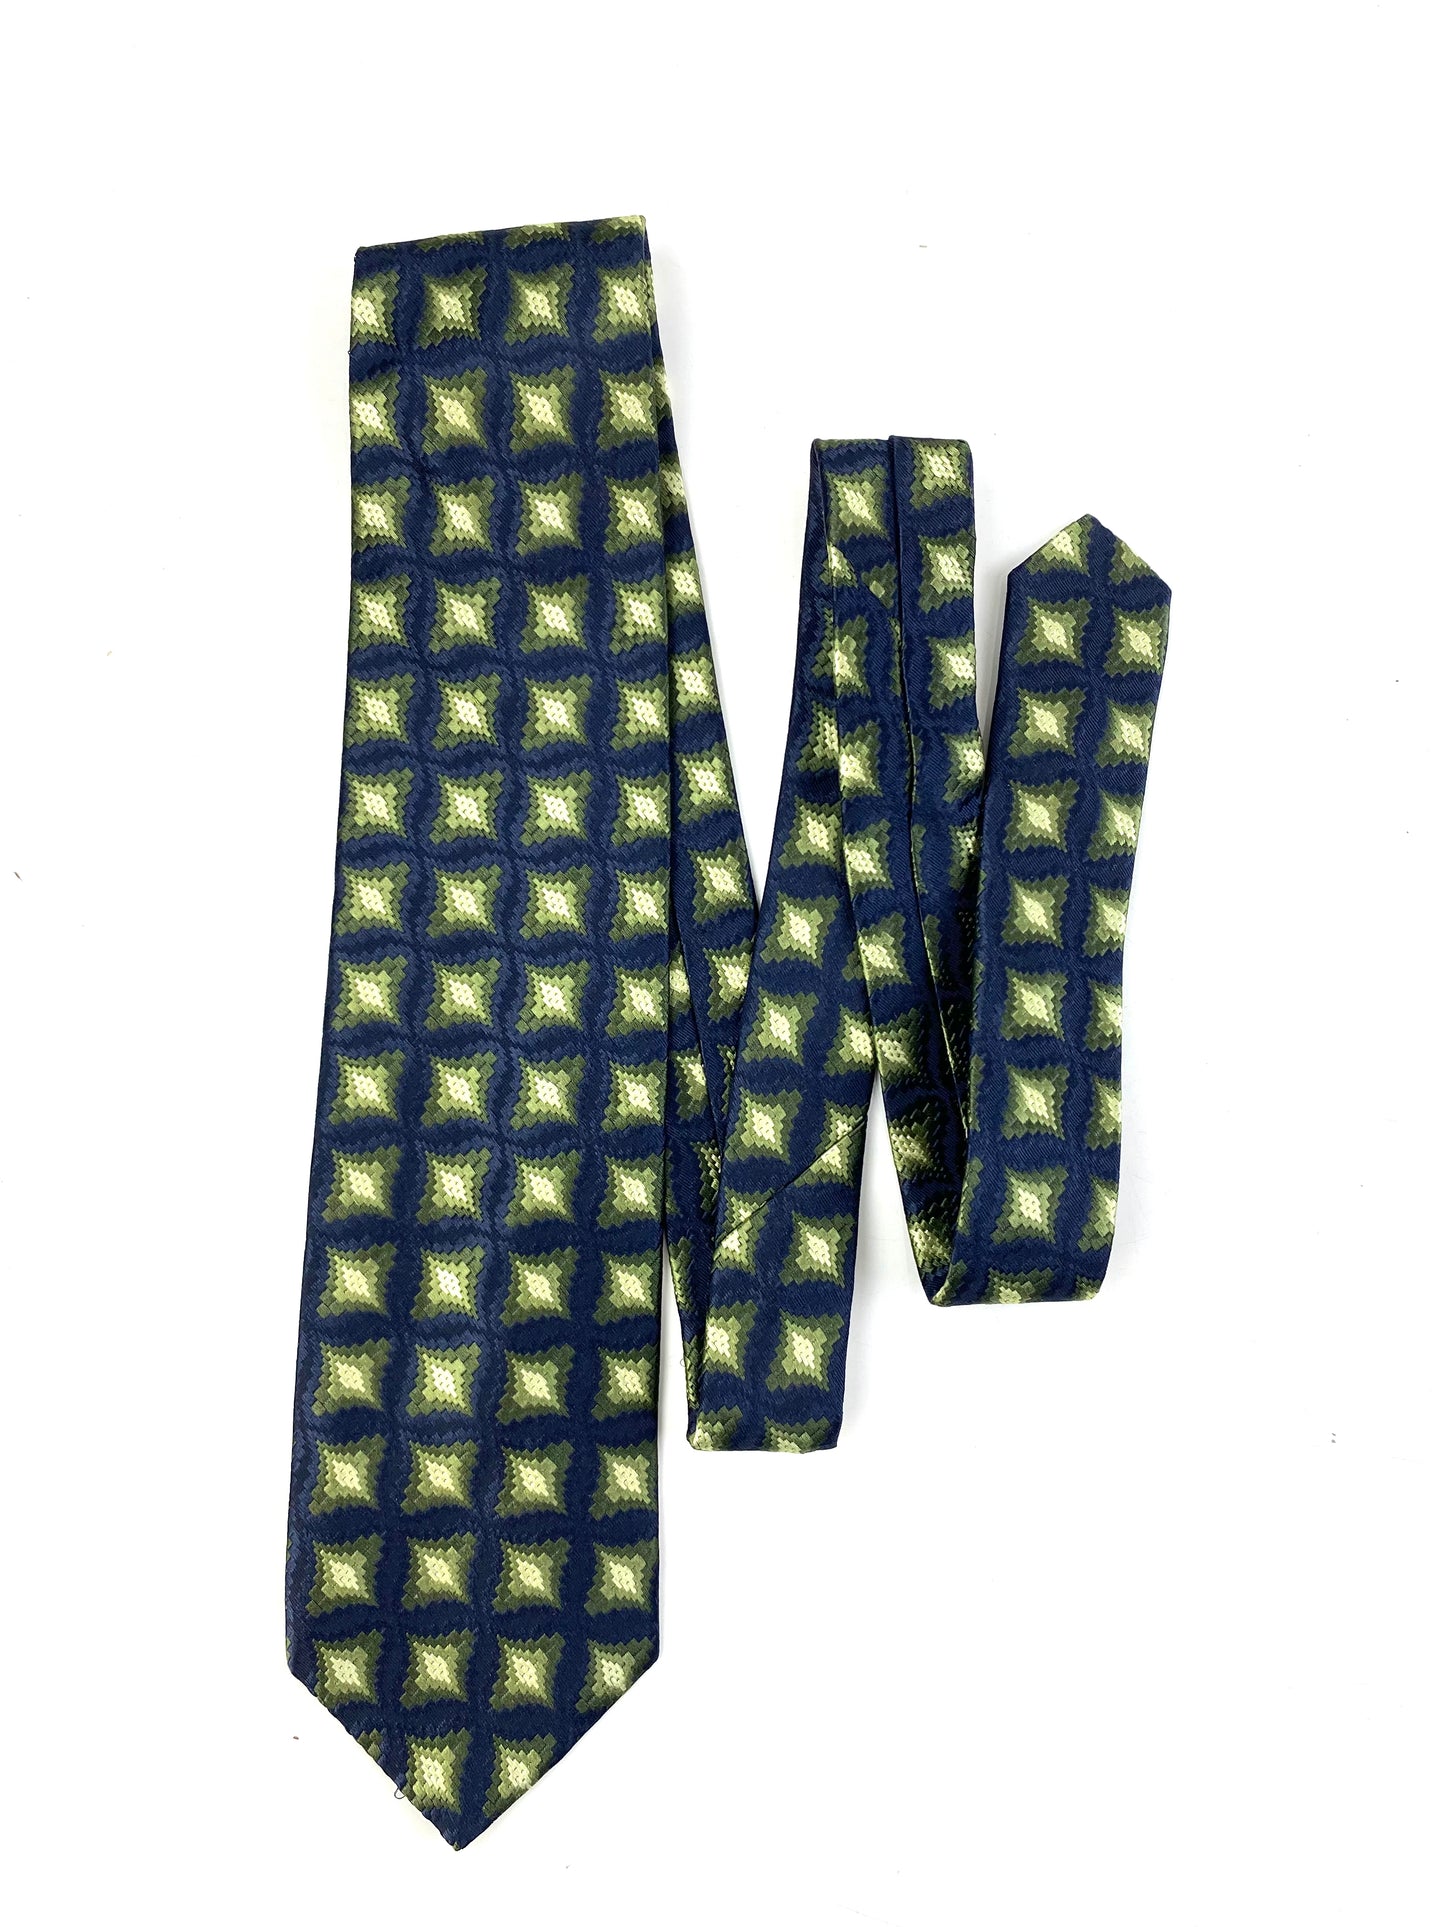 Front of: 90s Deadstock Silk Necktie, Men's Vintage Green/ Navy Geometric Check Pattern Tie, NOS